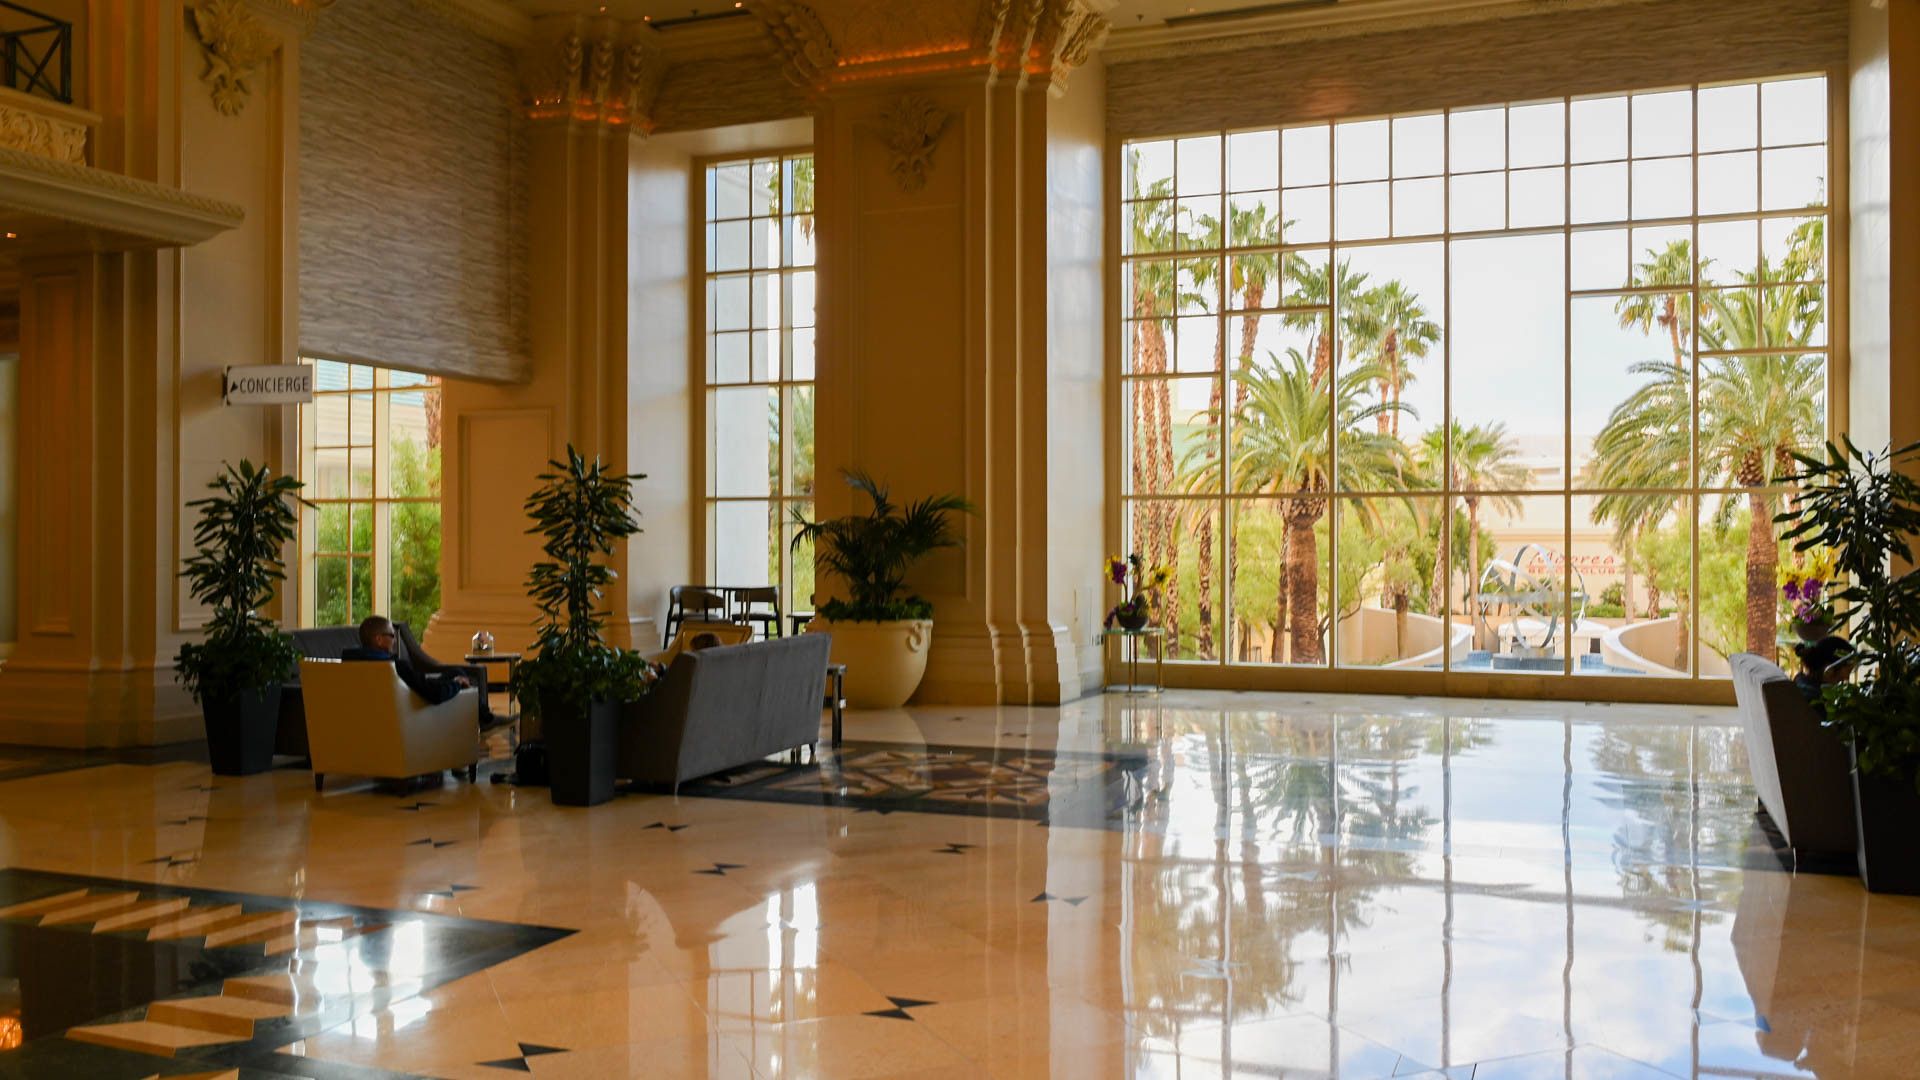 The lobby of the Mandalay Bay hotel in Las Vegas, NV.